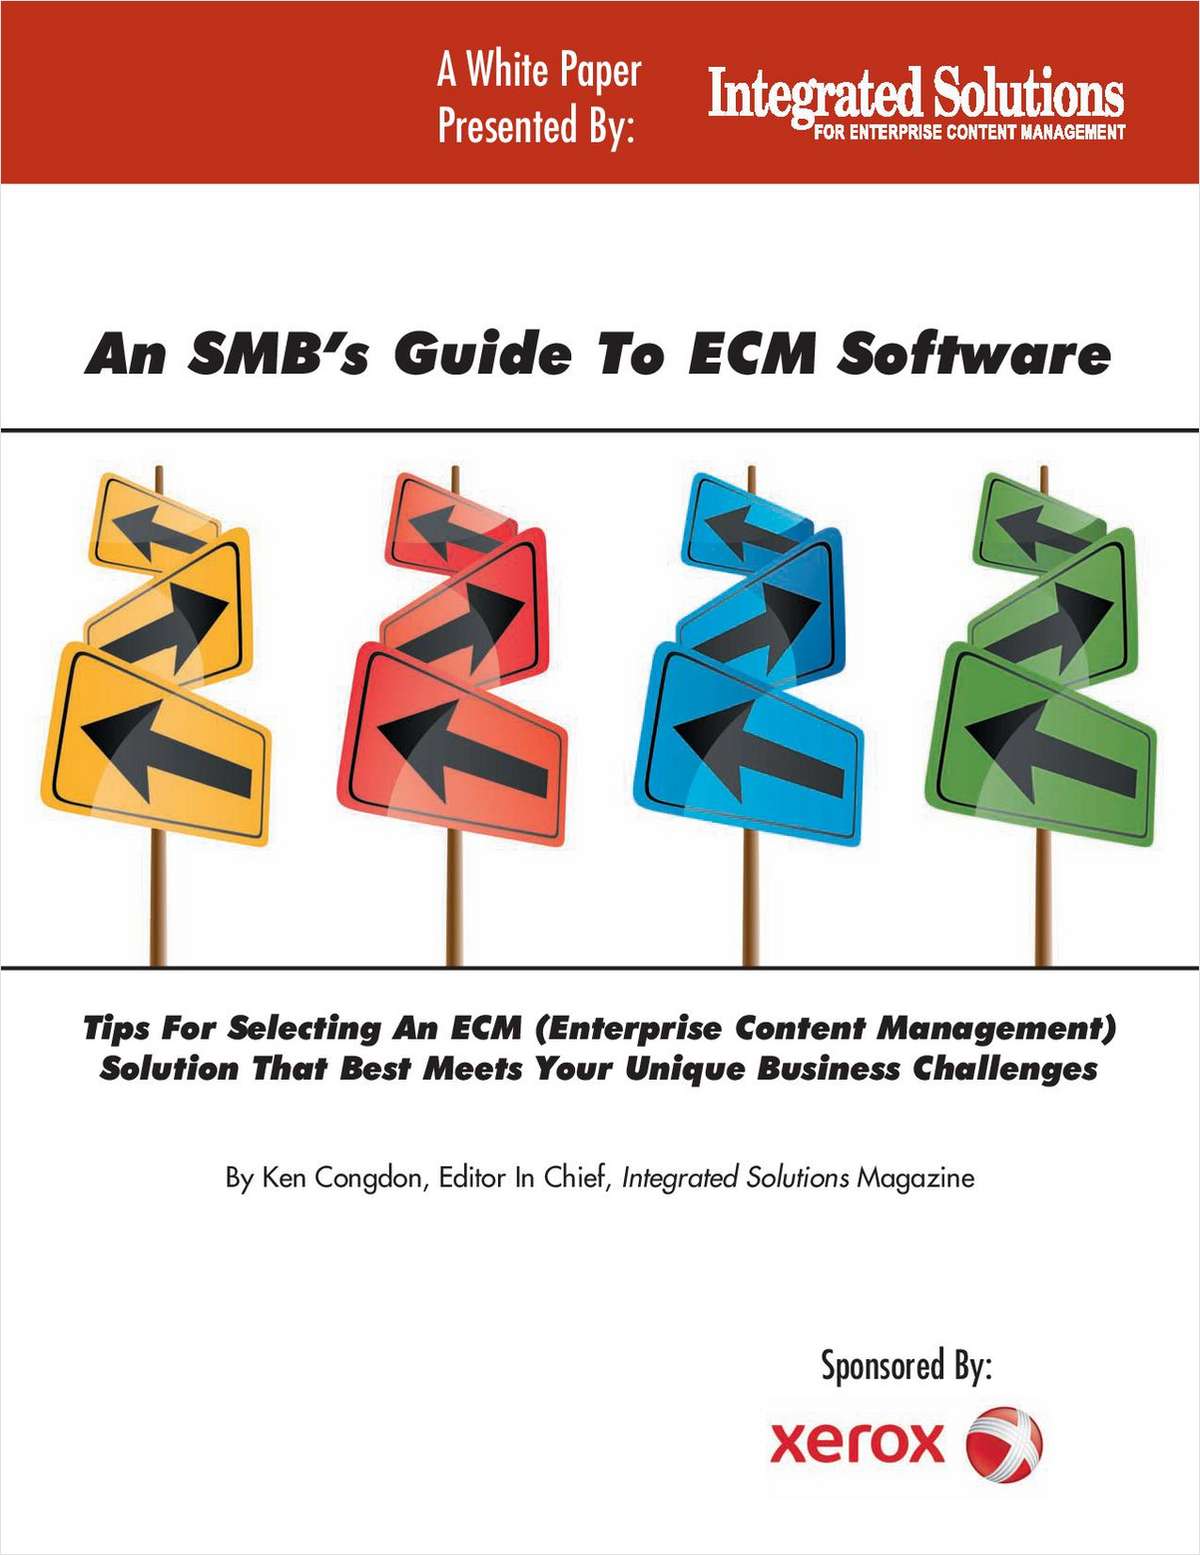 An SMB's Guide to ECM Software